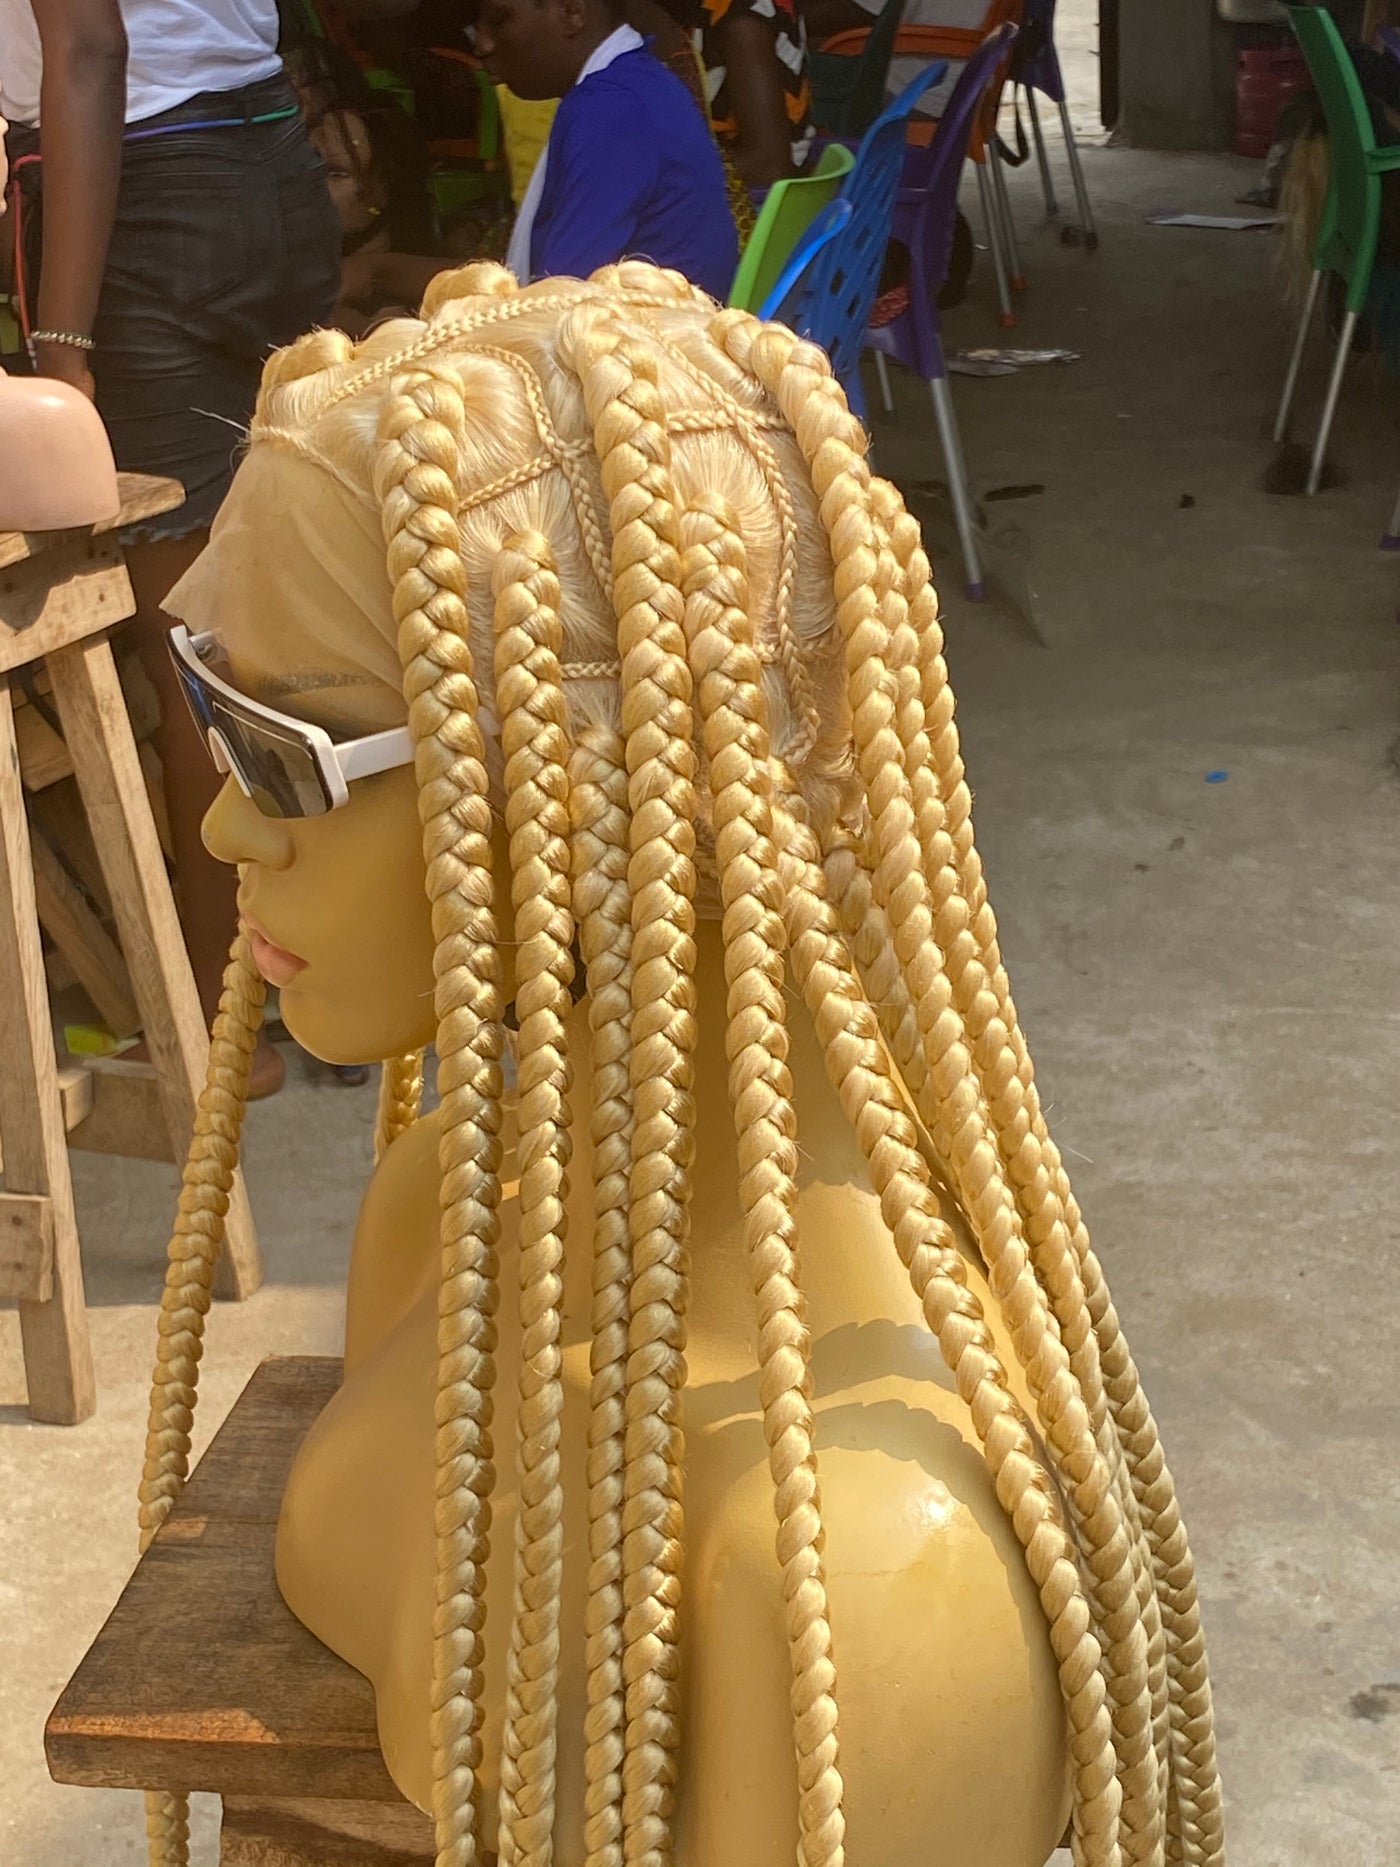 Jumbo Box Braid Wig - Sally Poshglad Braided Wigs Jumbo box braid wigs